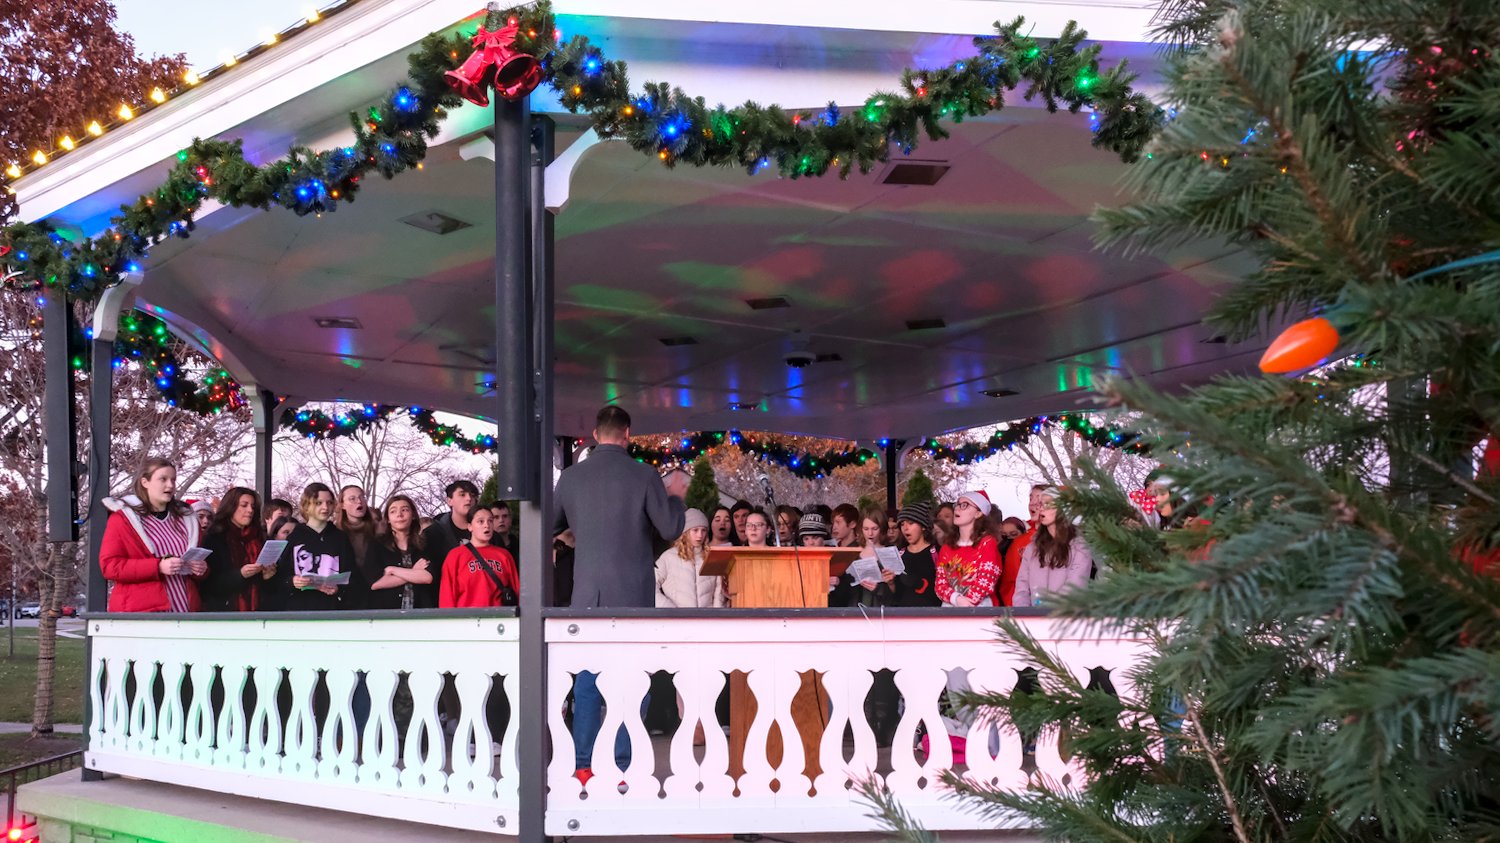 Choirs in the gazebo singing Christmas carols.